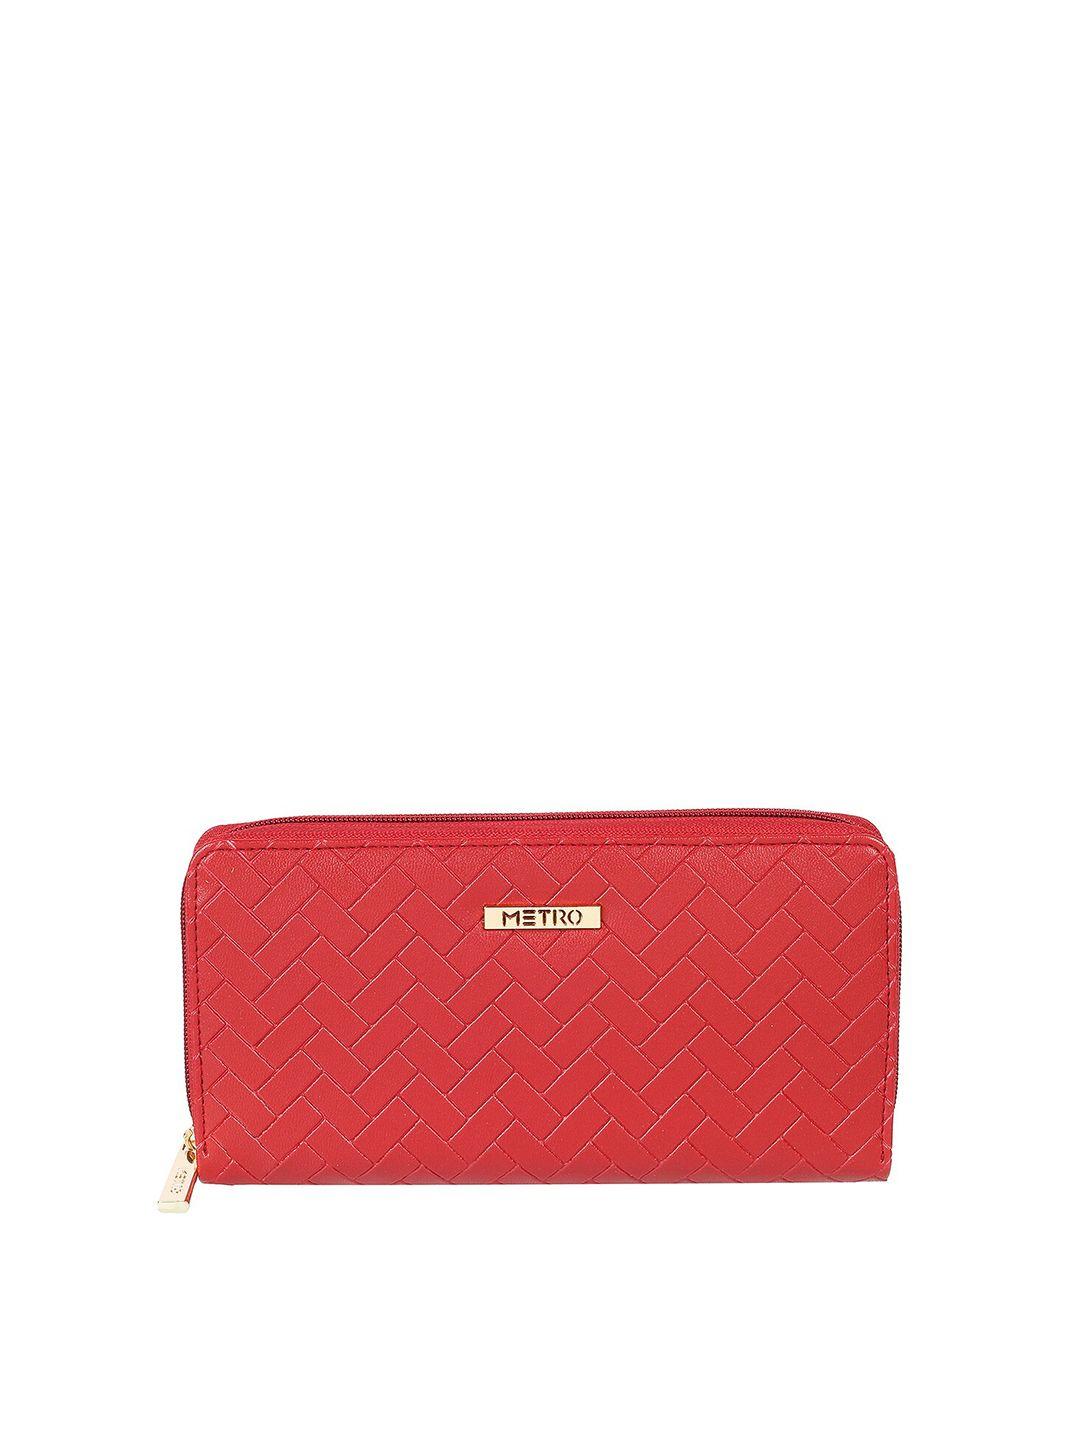 metro-women-red-&-gold-toned-checked-zip-around-wallet